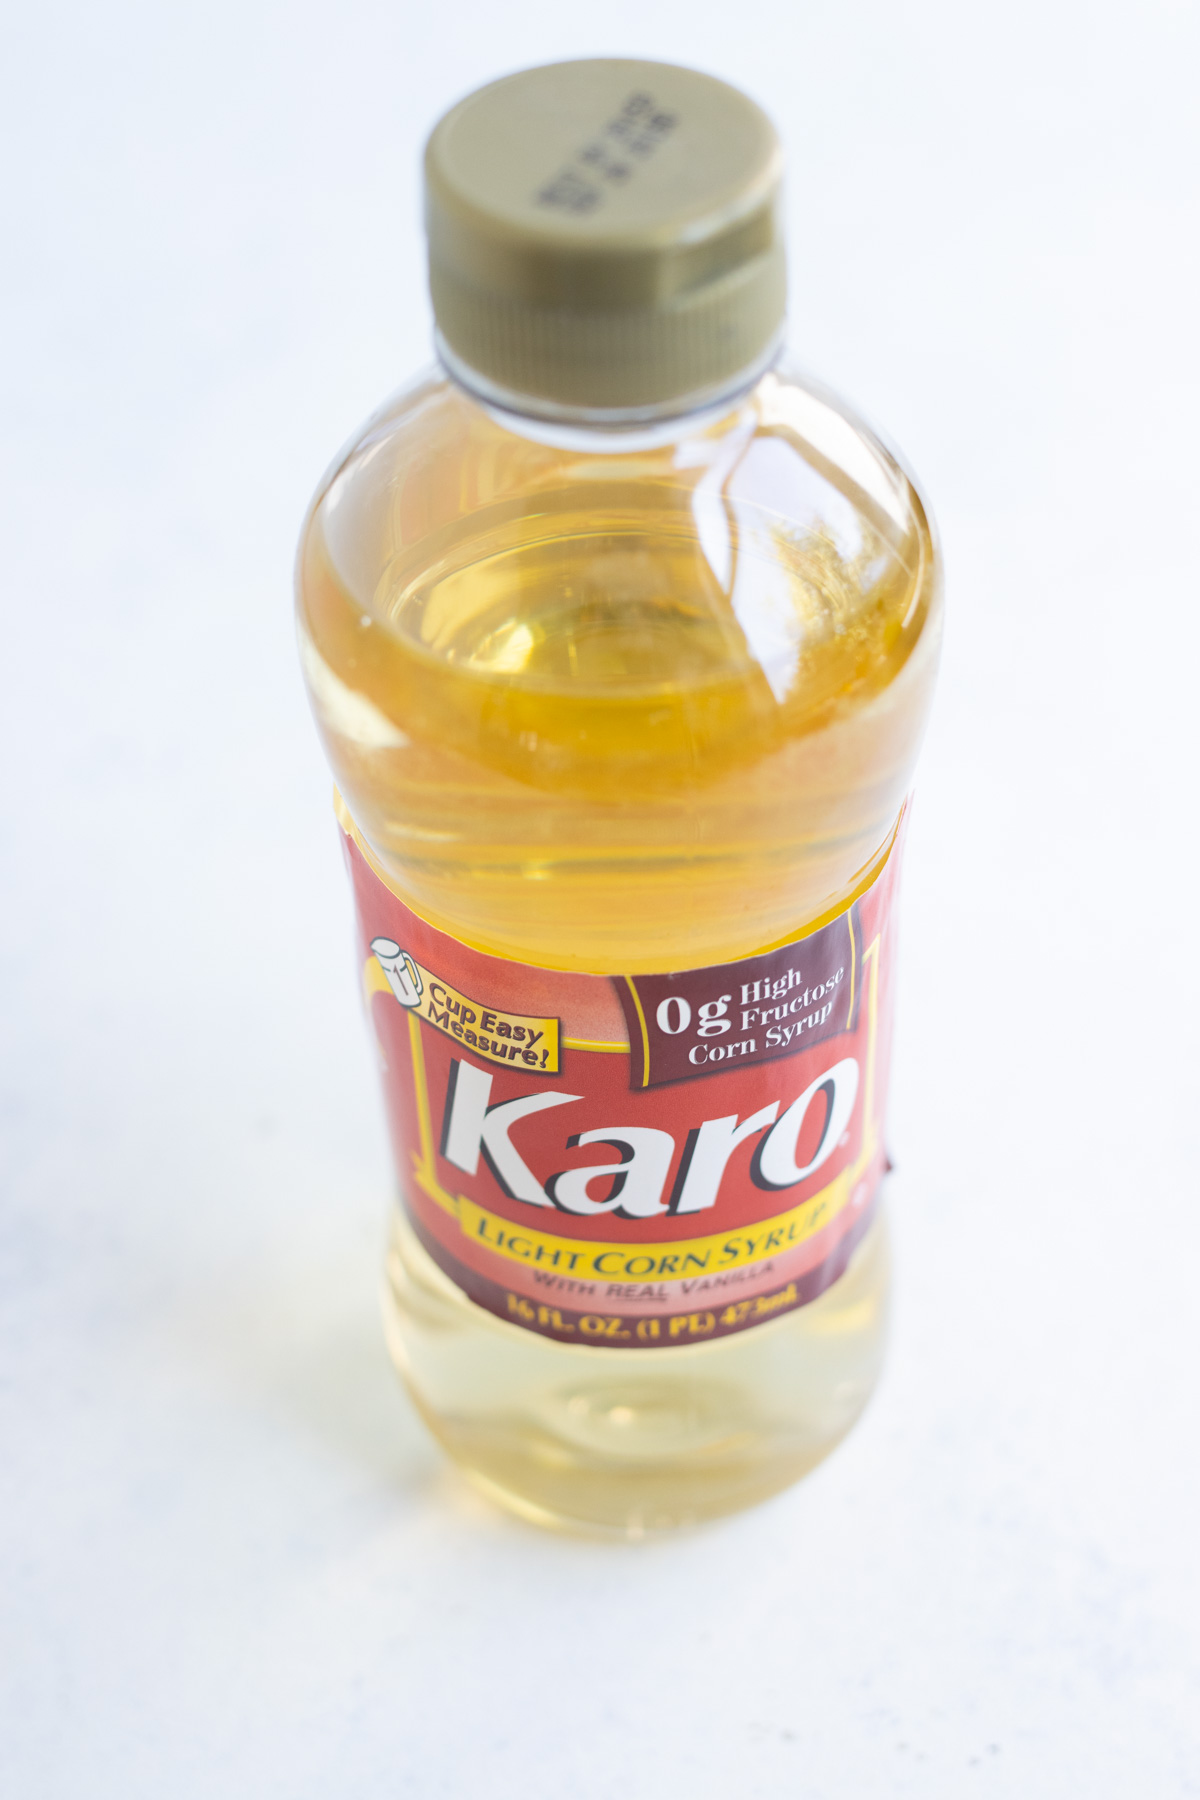 Top view of Karo light corn syrup.